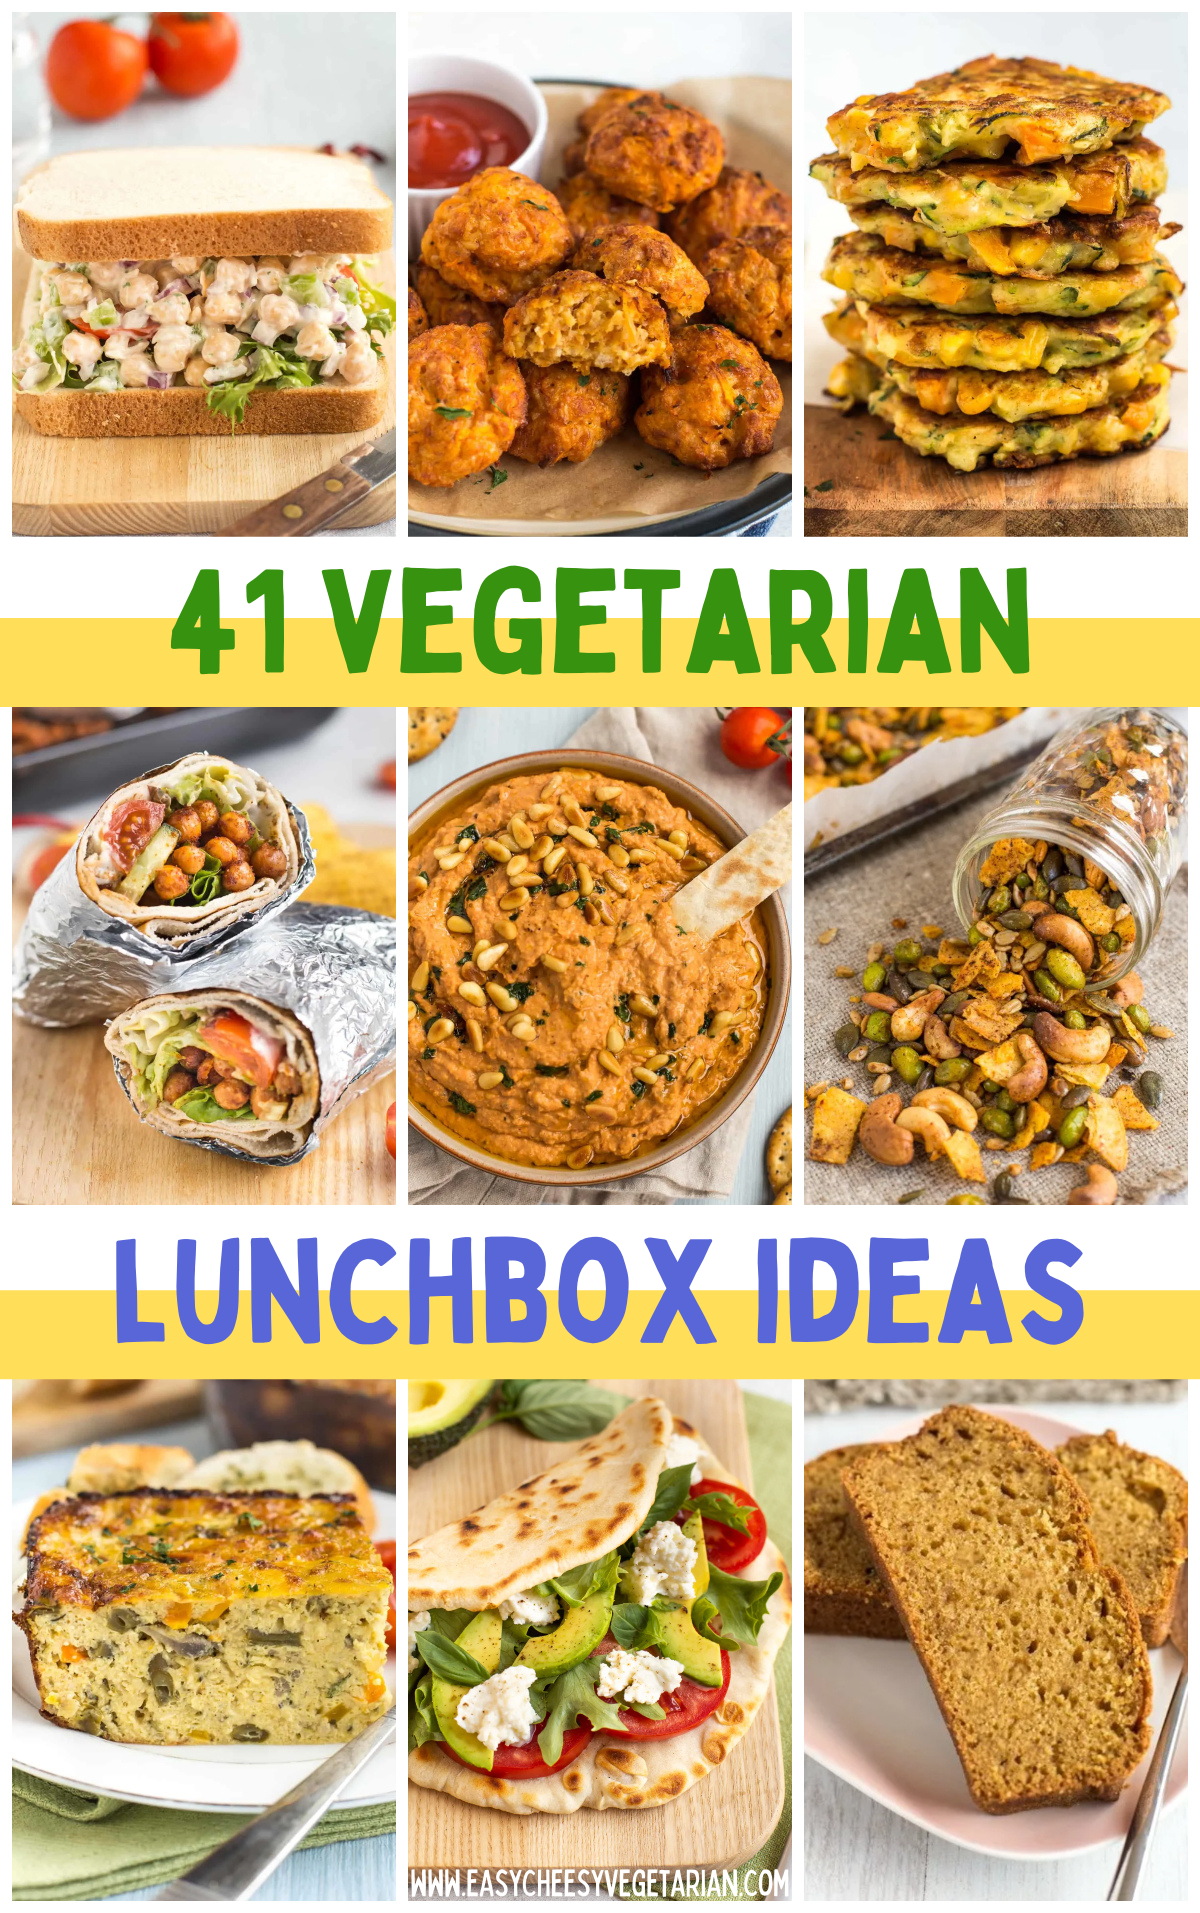 https://www.easycheesyvegetarian.com/wp-content/uploads/2017/08/41-vegetarian-lunchbox-ideas-1.png